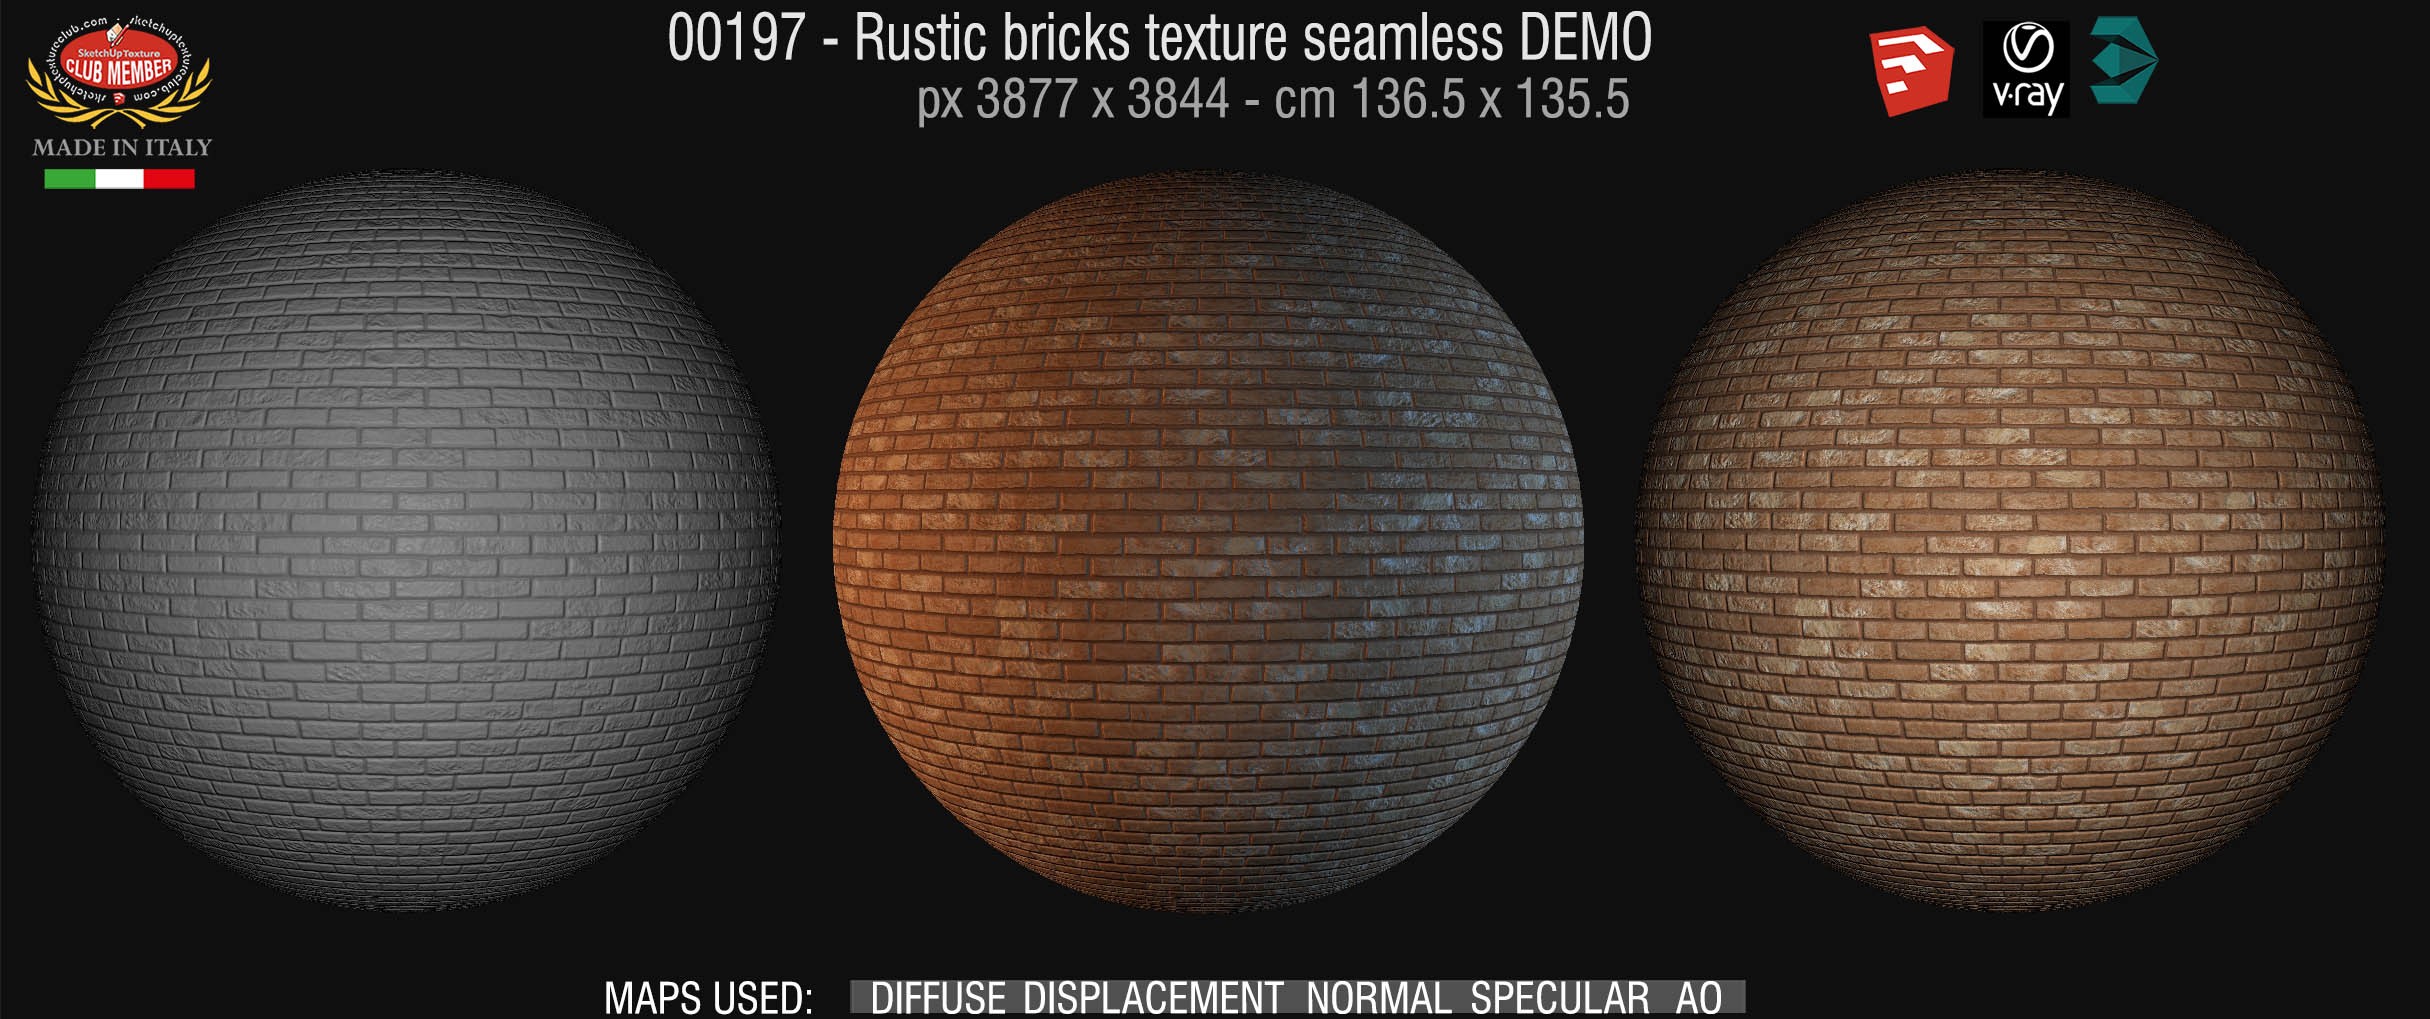 00197 Rustic bricks texture seamless + maps DEMO